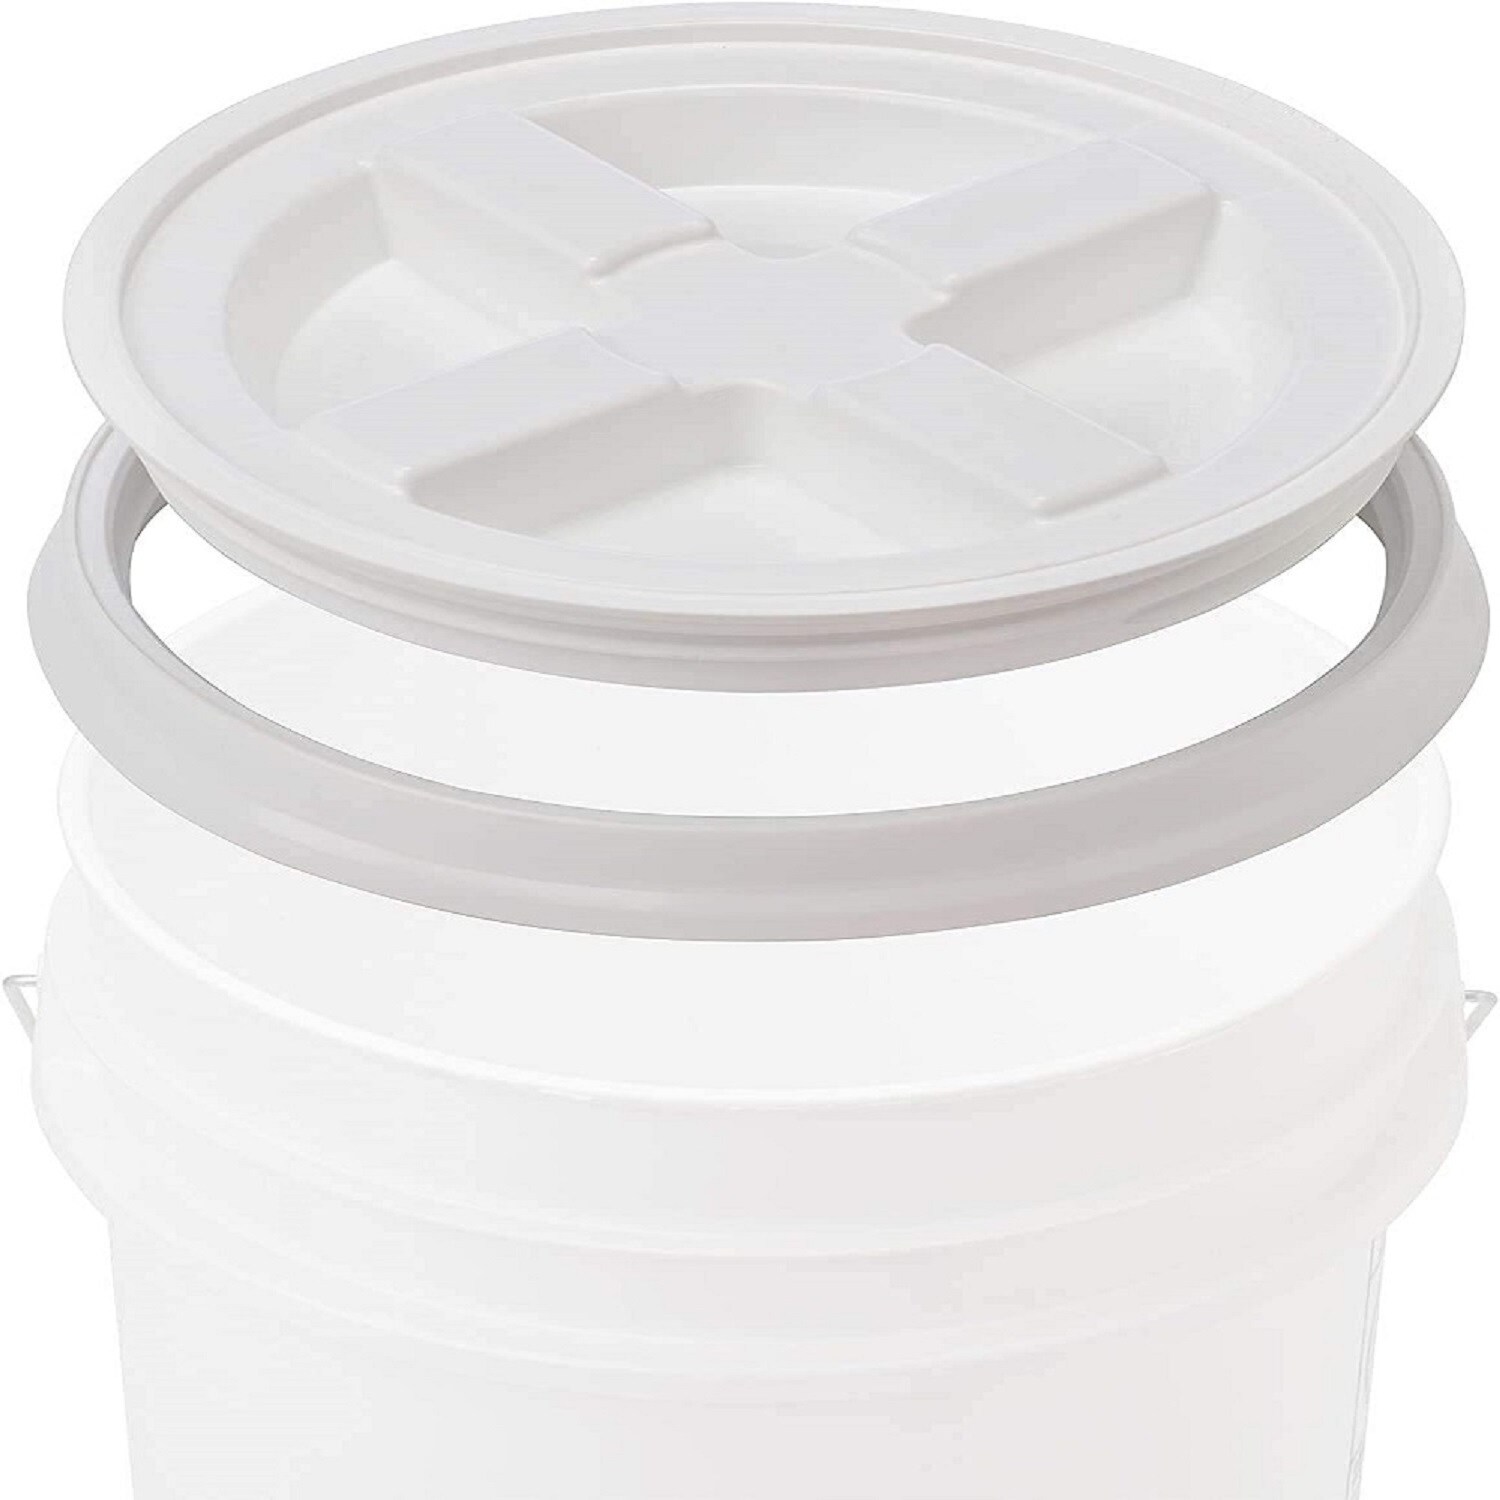 Encore Plastics 5-Gallon White Plastic Bucket Lid at